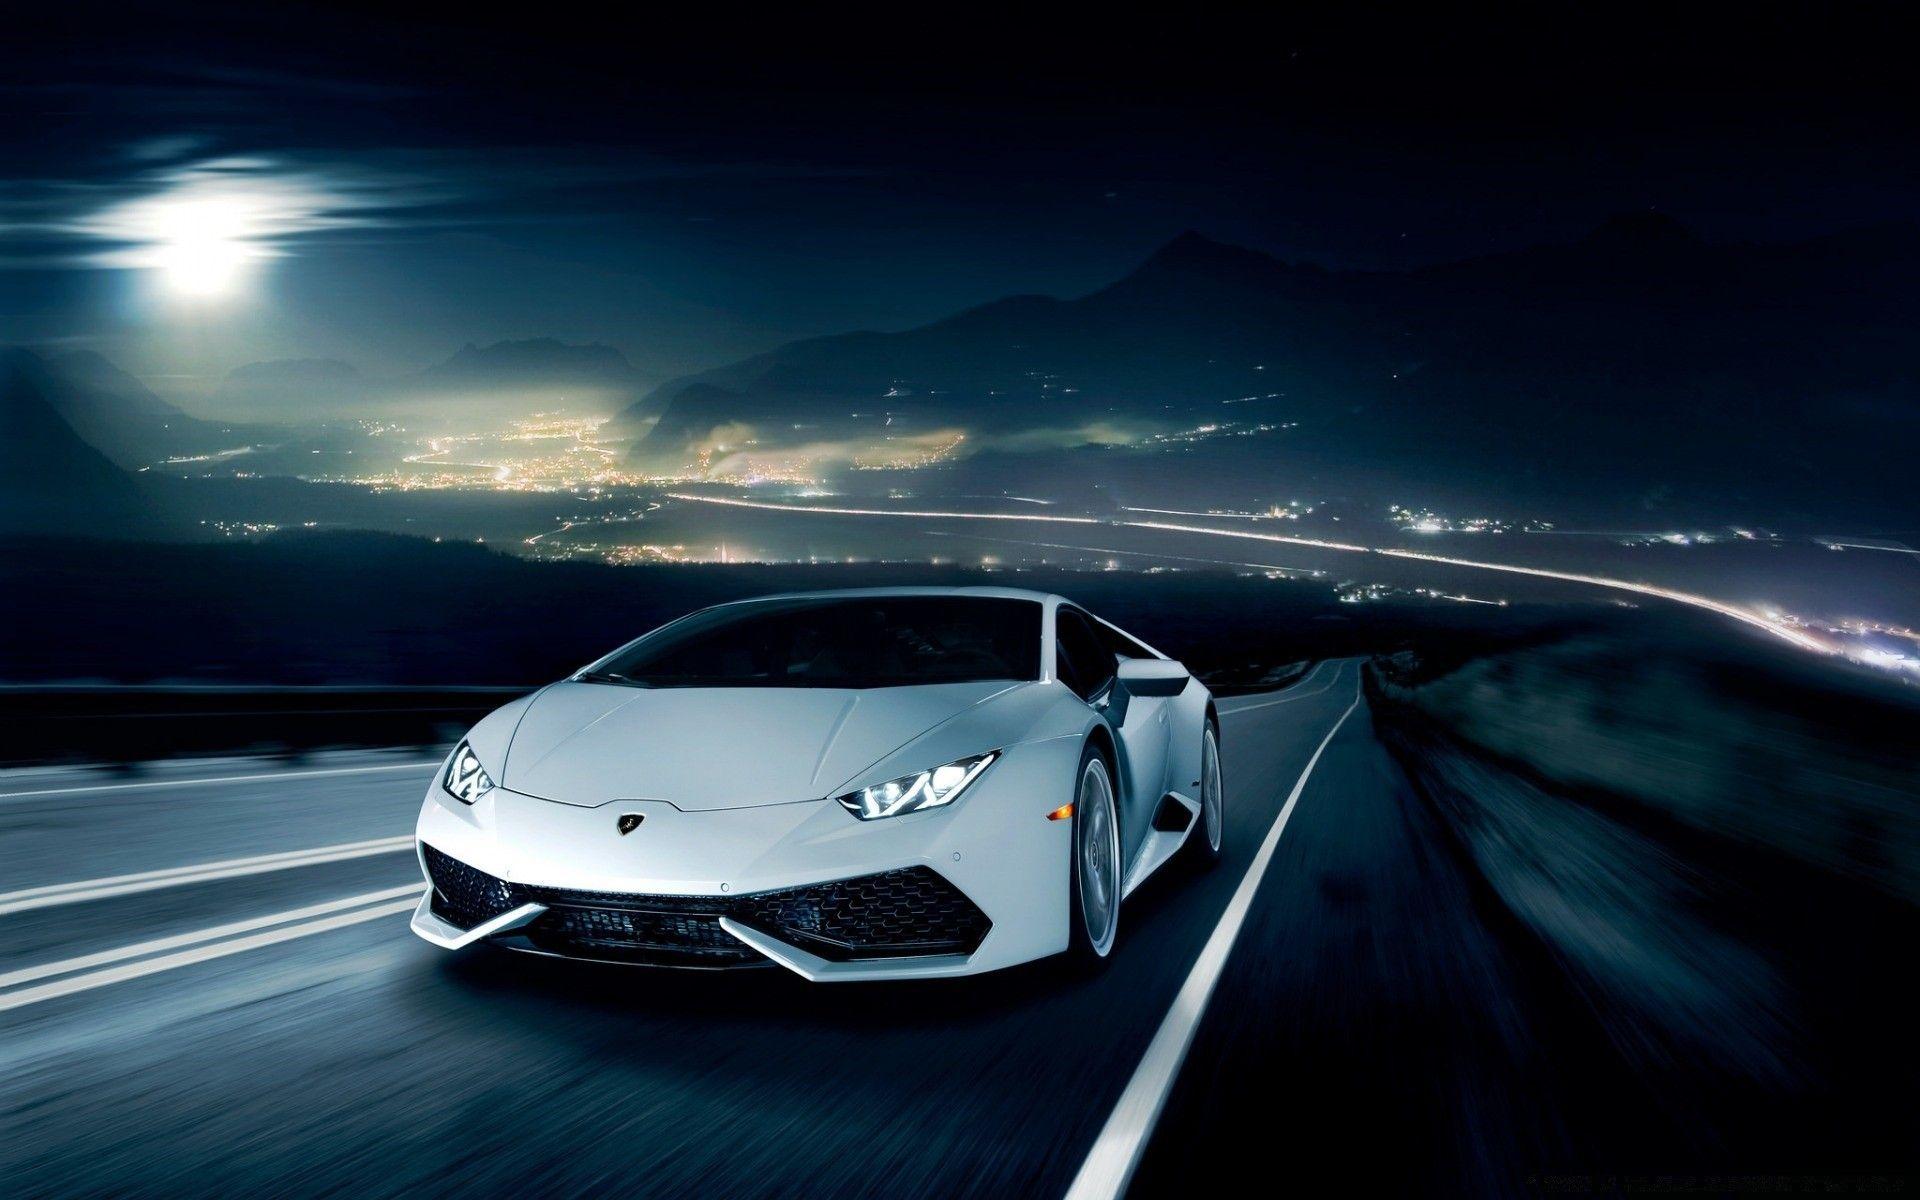 Lamborghini Huracan on the Road at Night. iPhone wallpaper for free